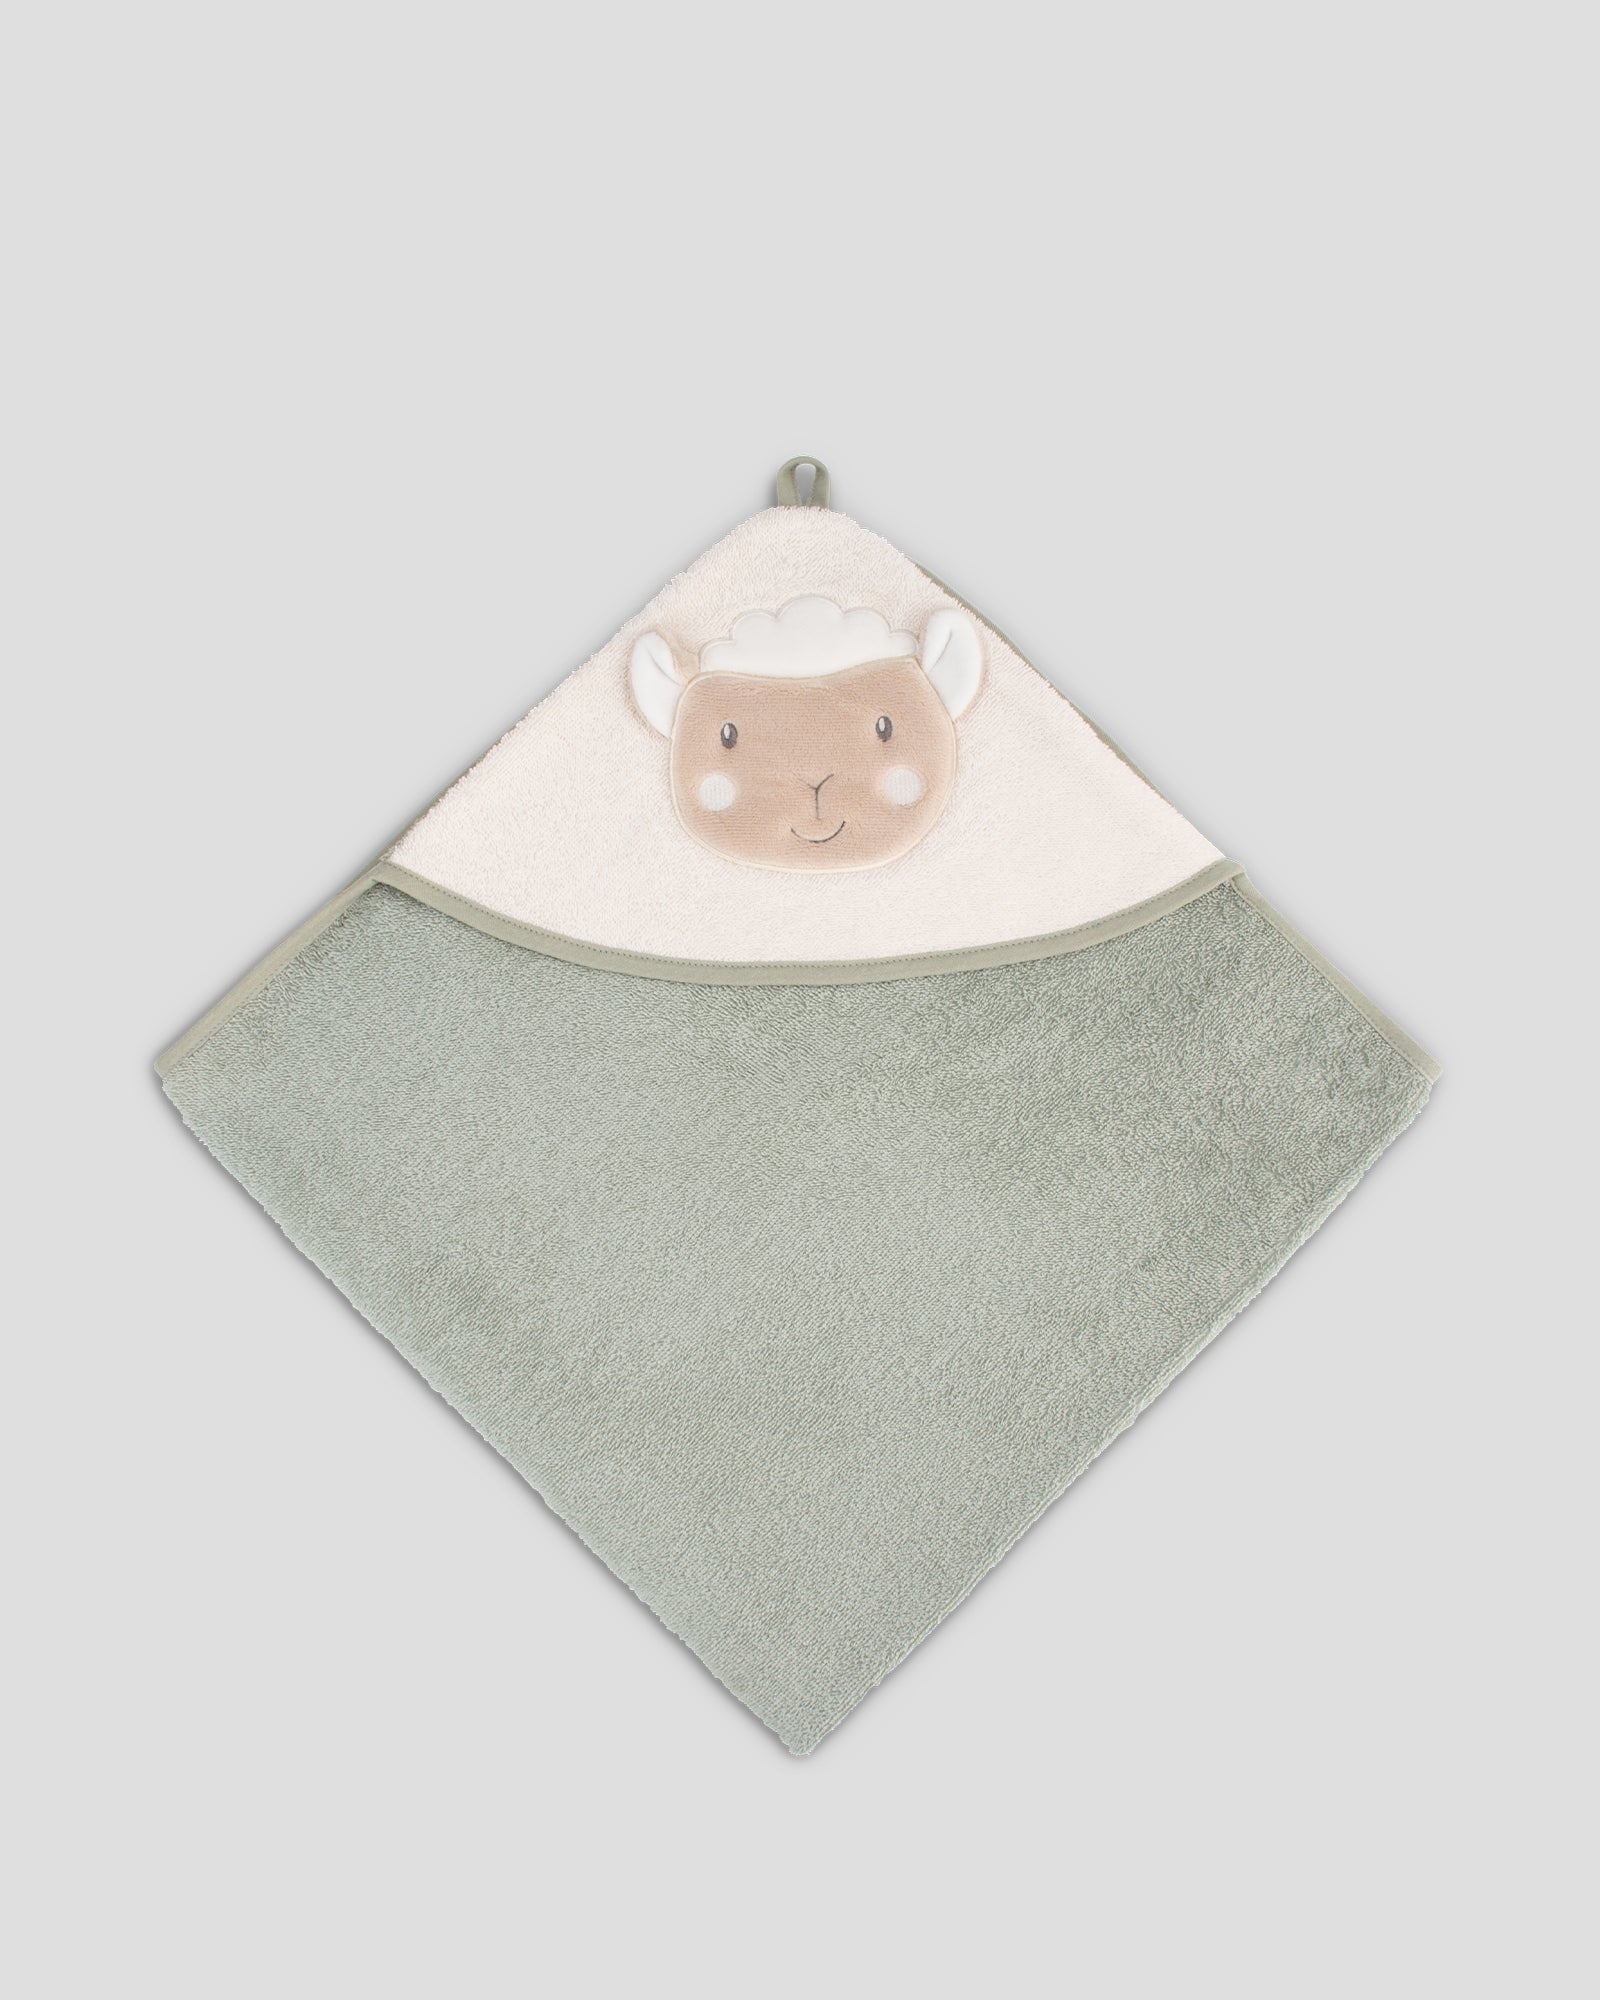 The Little Linen Company Character Baby Hooded Towel - Farmyard Lamb